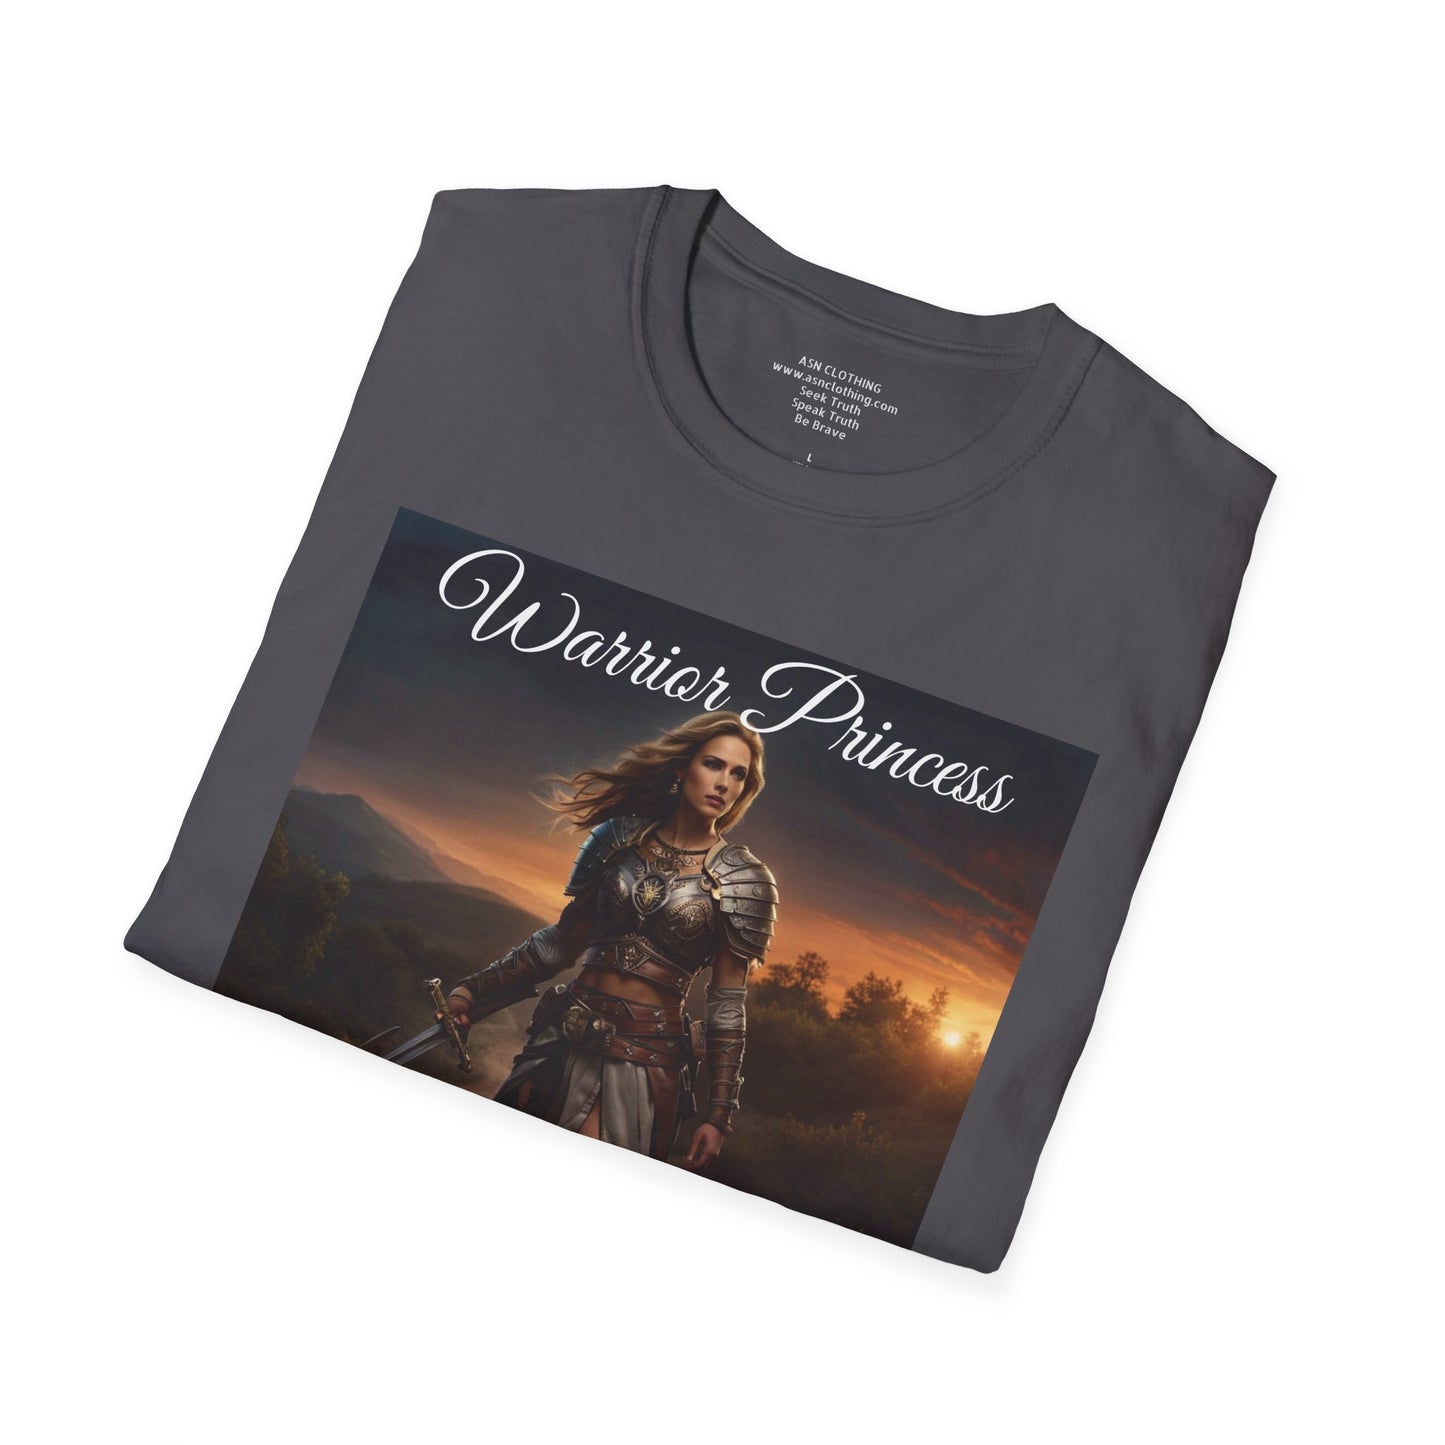 Warrior Princess Road Less Traveled T-Shirt (Gildan)